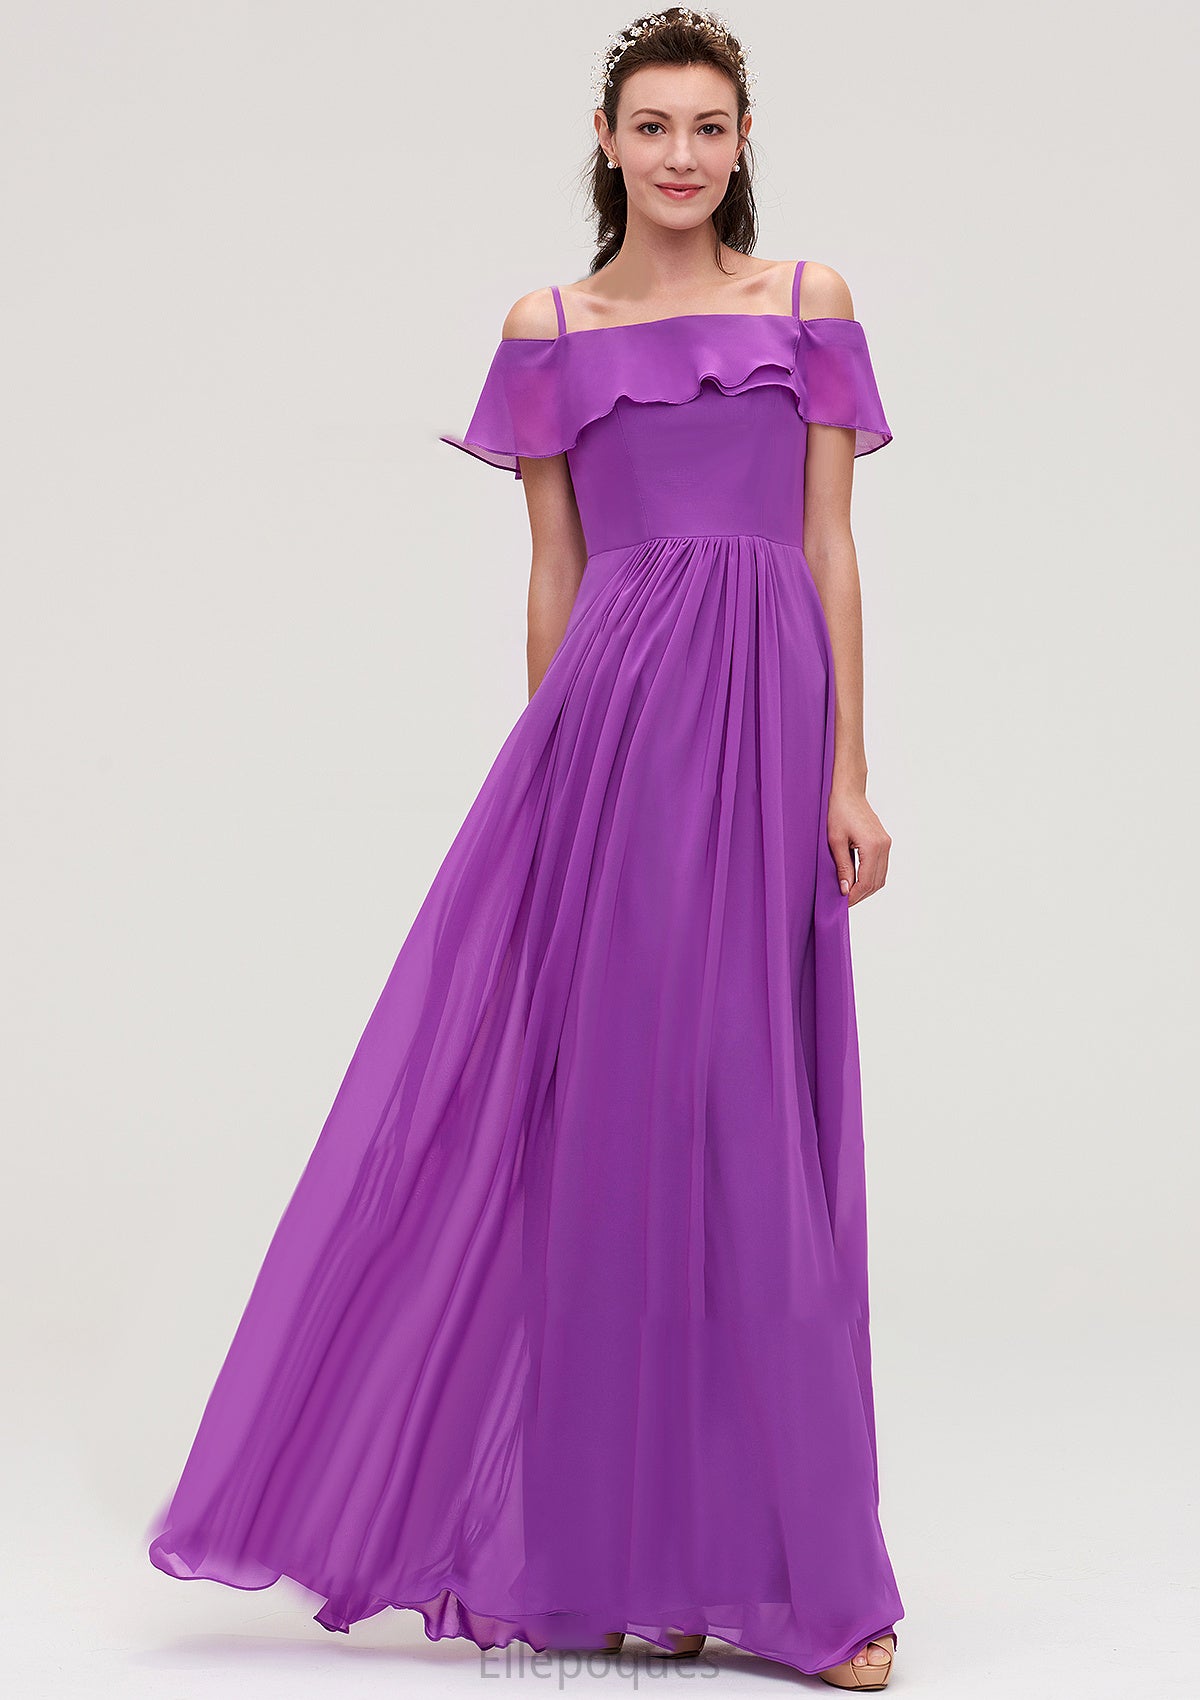 Sleeveless Off-the-Shoulder Chiffon A-line/Princess Long/Floor-Length Bridesmaid Dresseses With Ruffles Kara HOP0025452